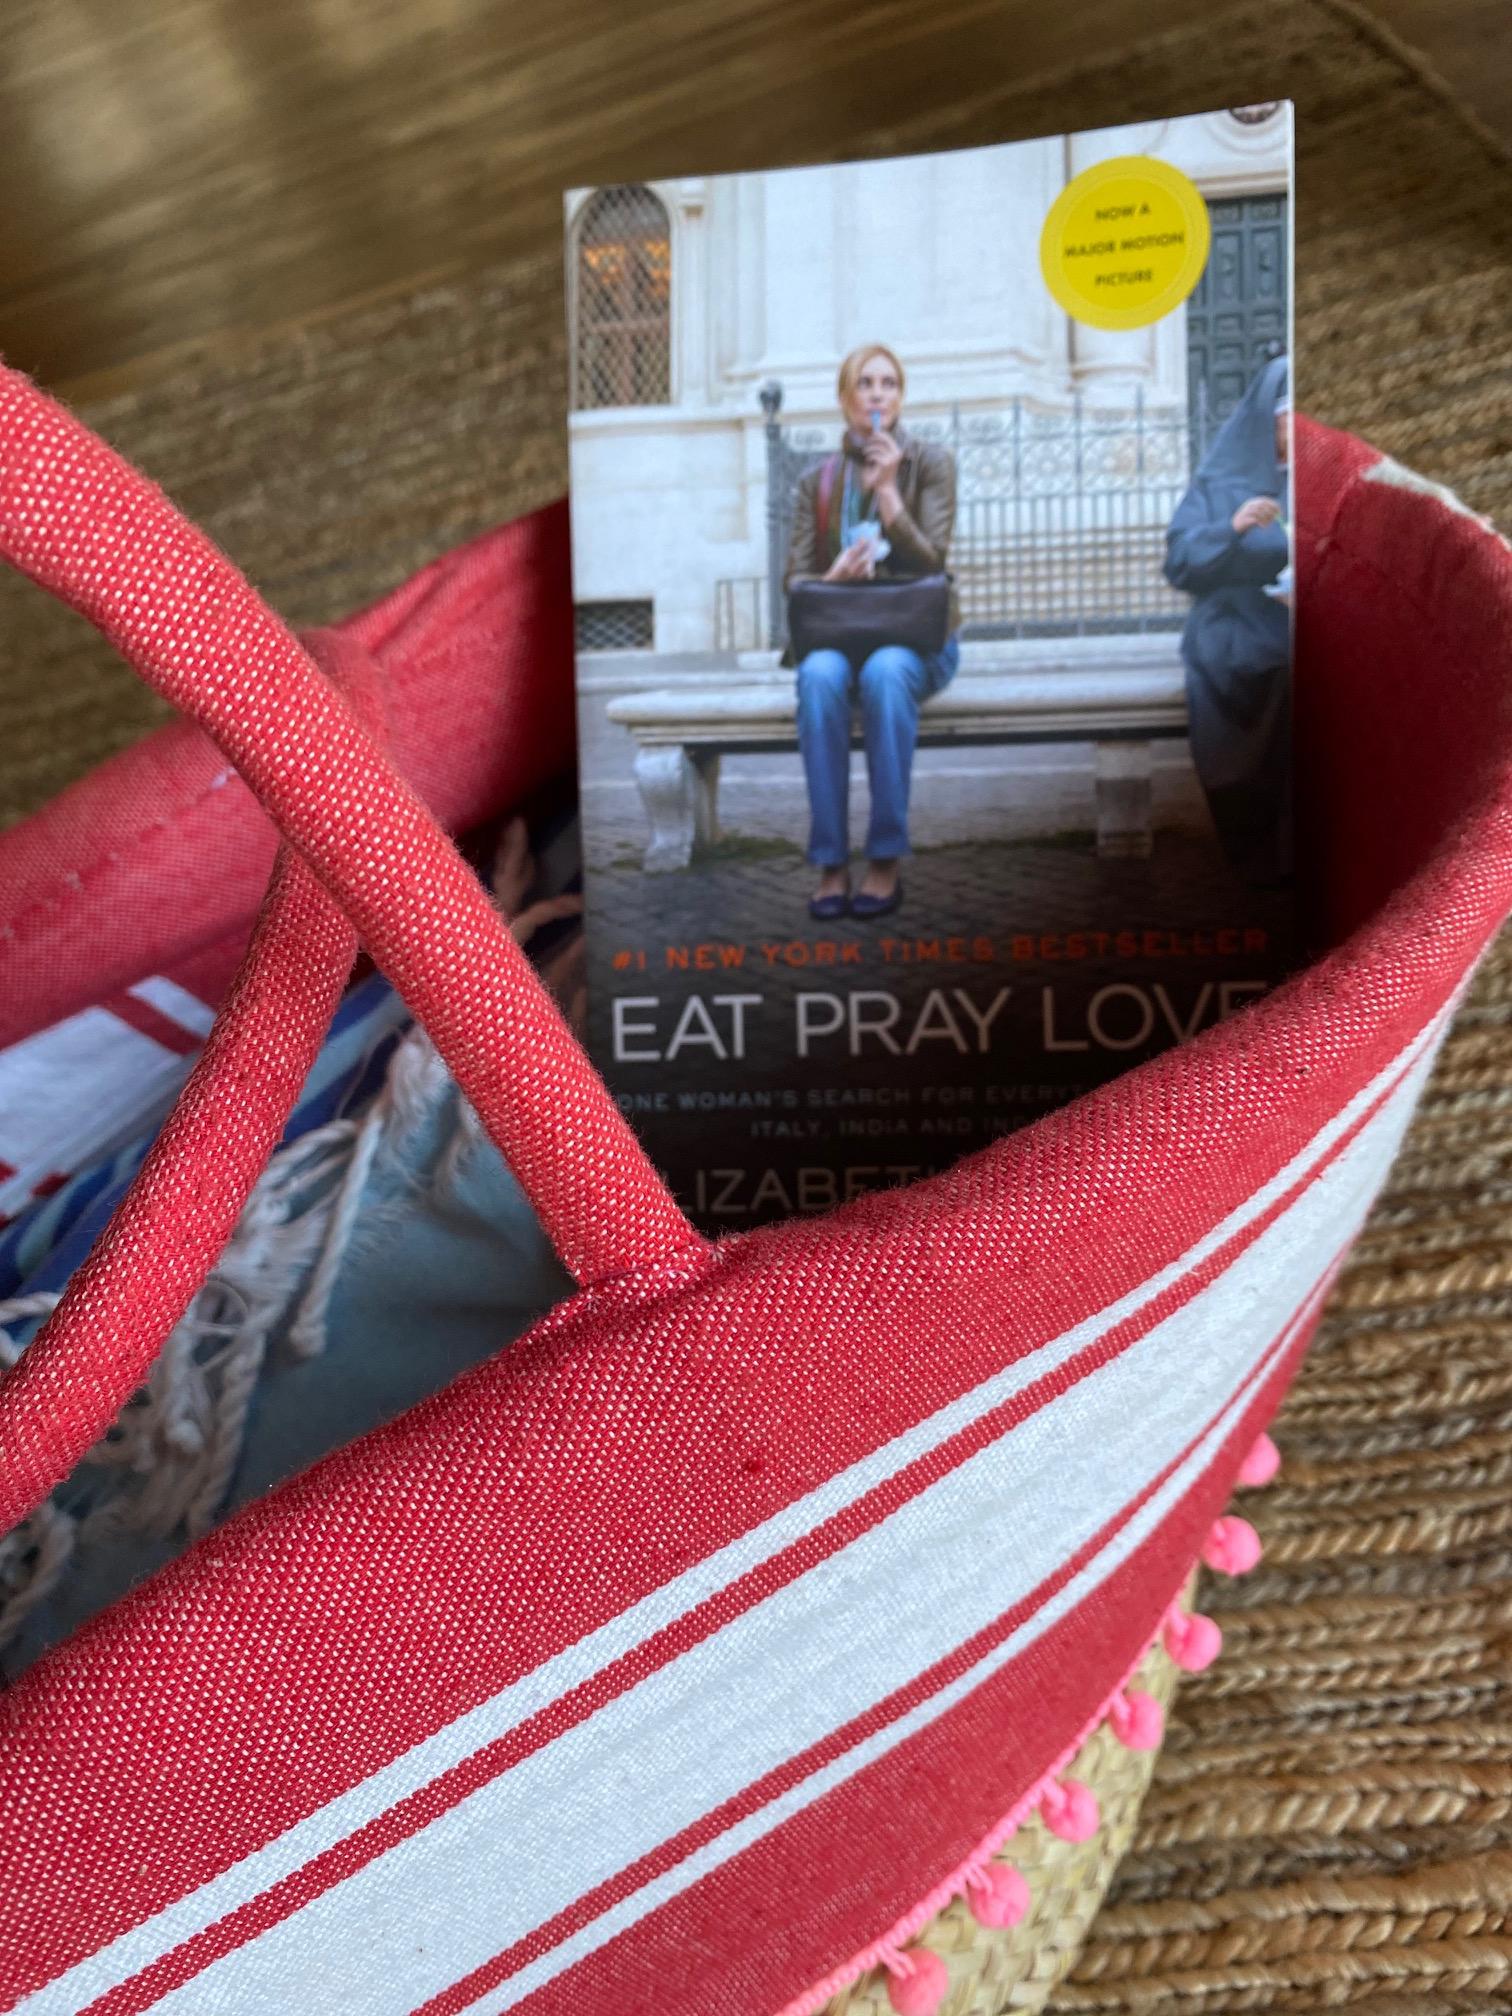 Eat Pray Love - Island themed books